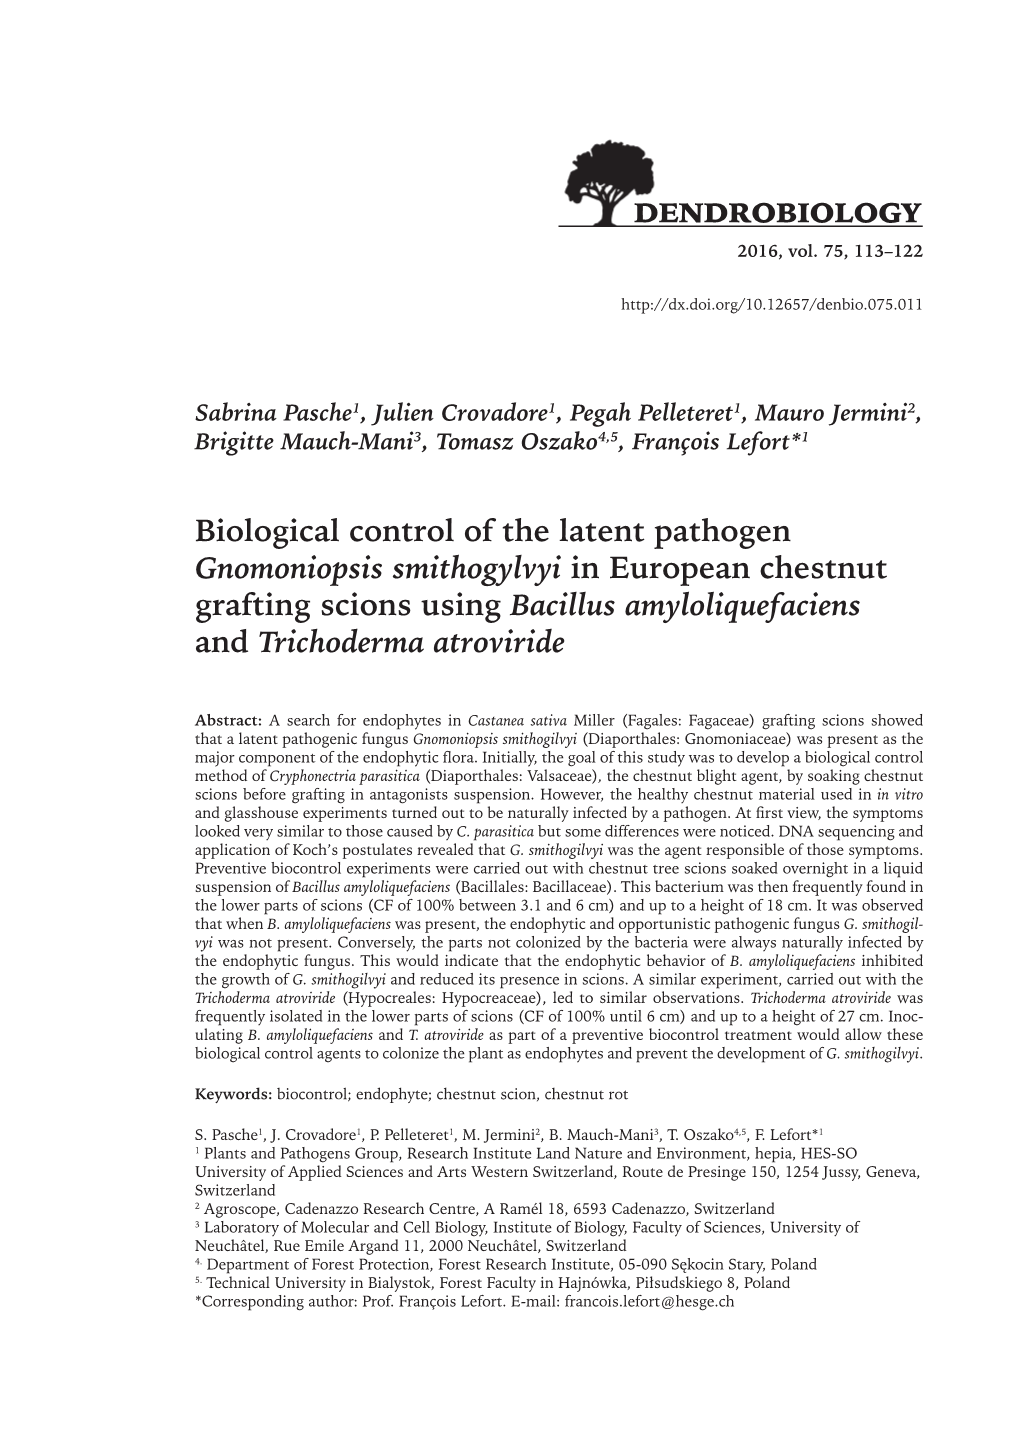 Biological Control of the Latent Pathogen Gnomoniopsis Smithogylvyi in European Chestnut Grafting Scions Using Bacillus Amyloliquefaciens and Trichoderma Atroviride